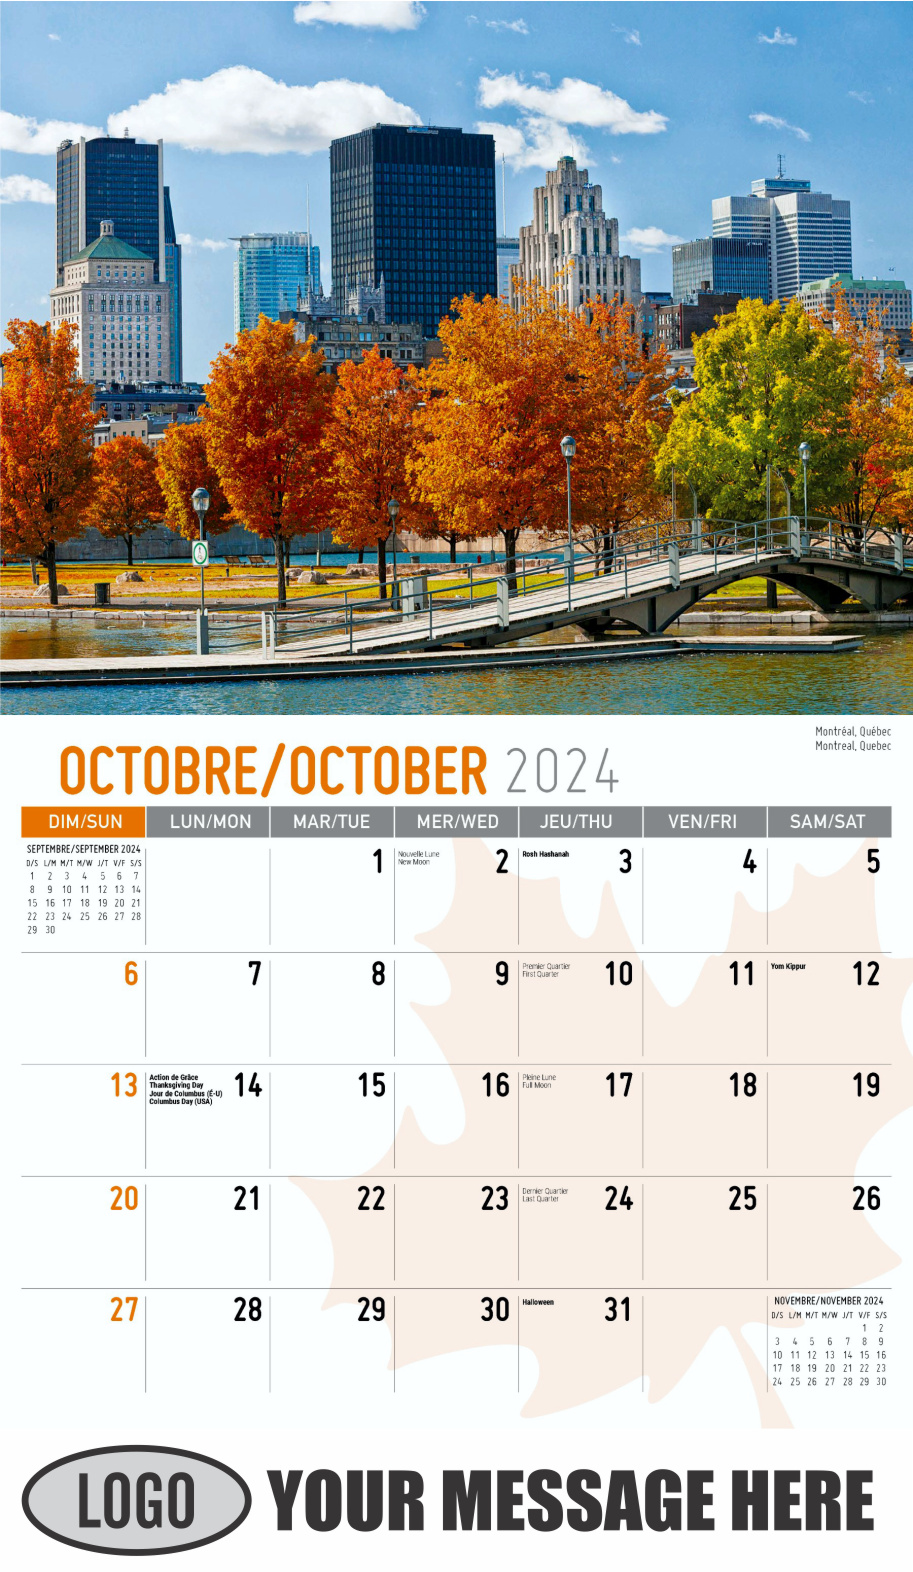 Scenes of Canada 2024 Bilingual Business Advertising Calendar - October